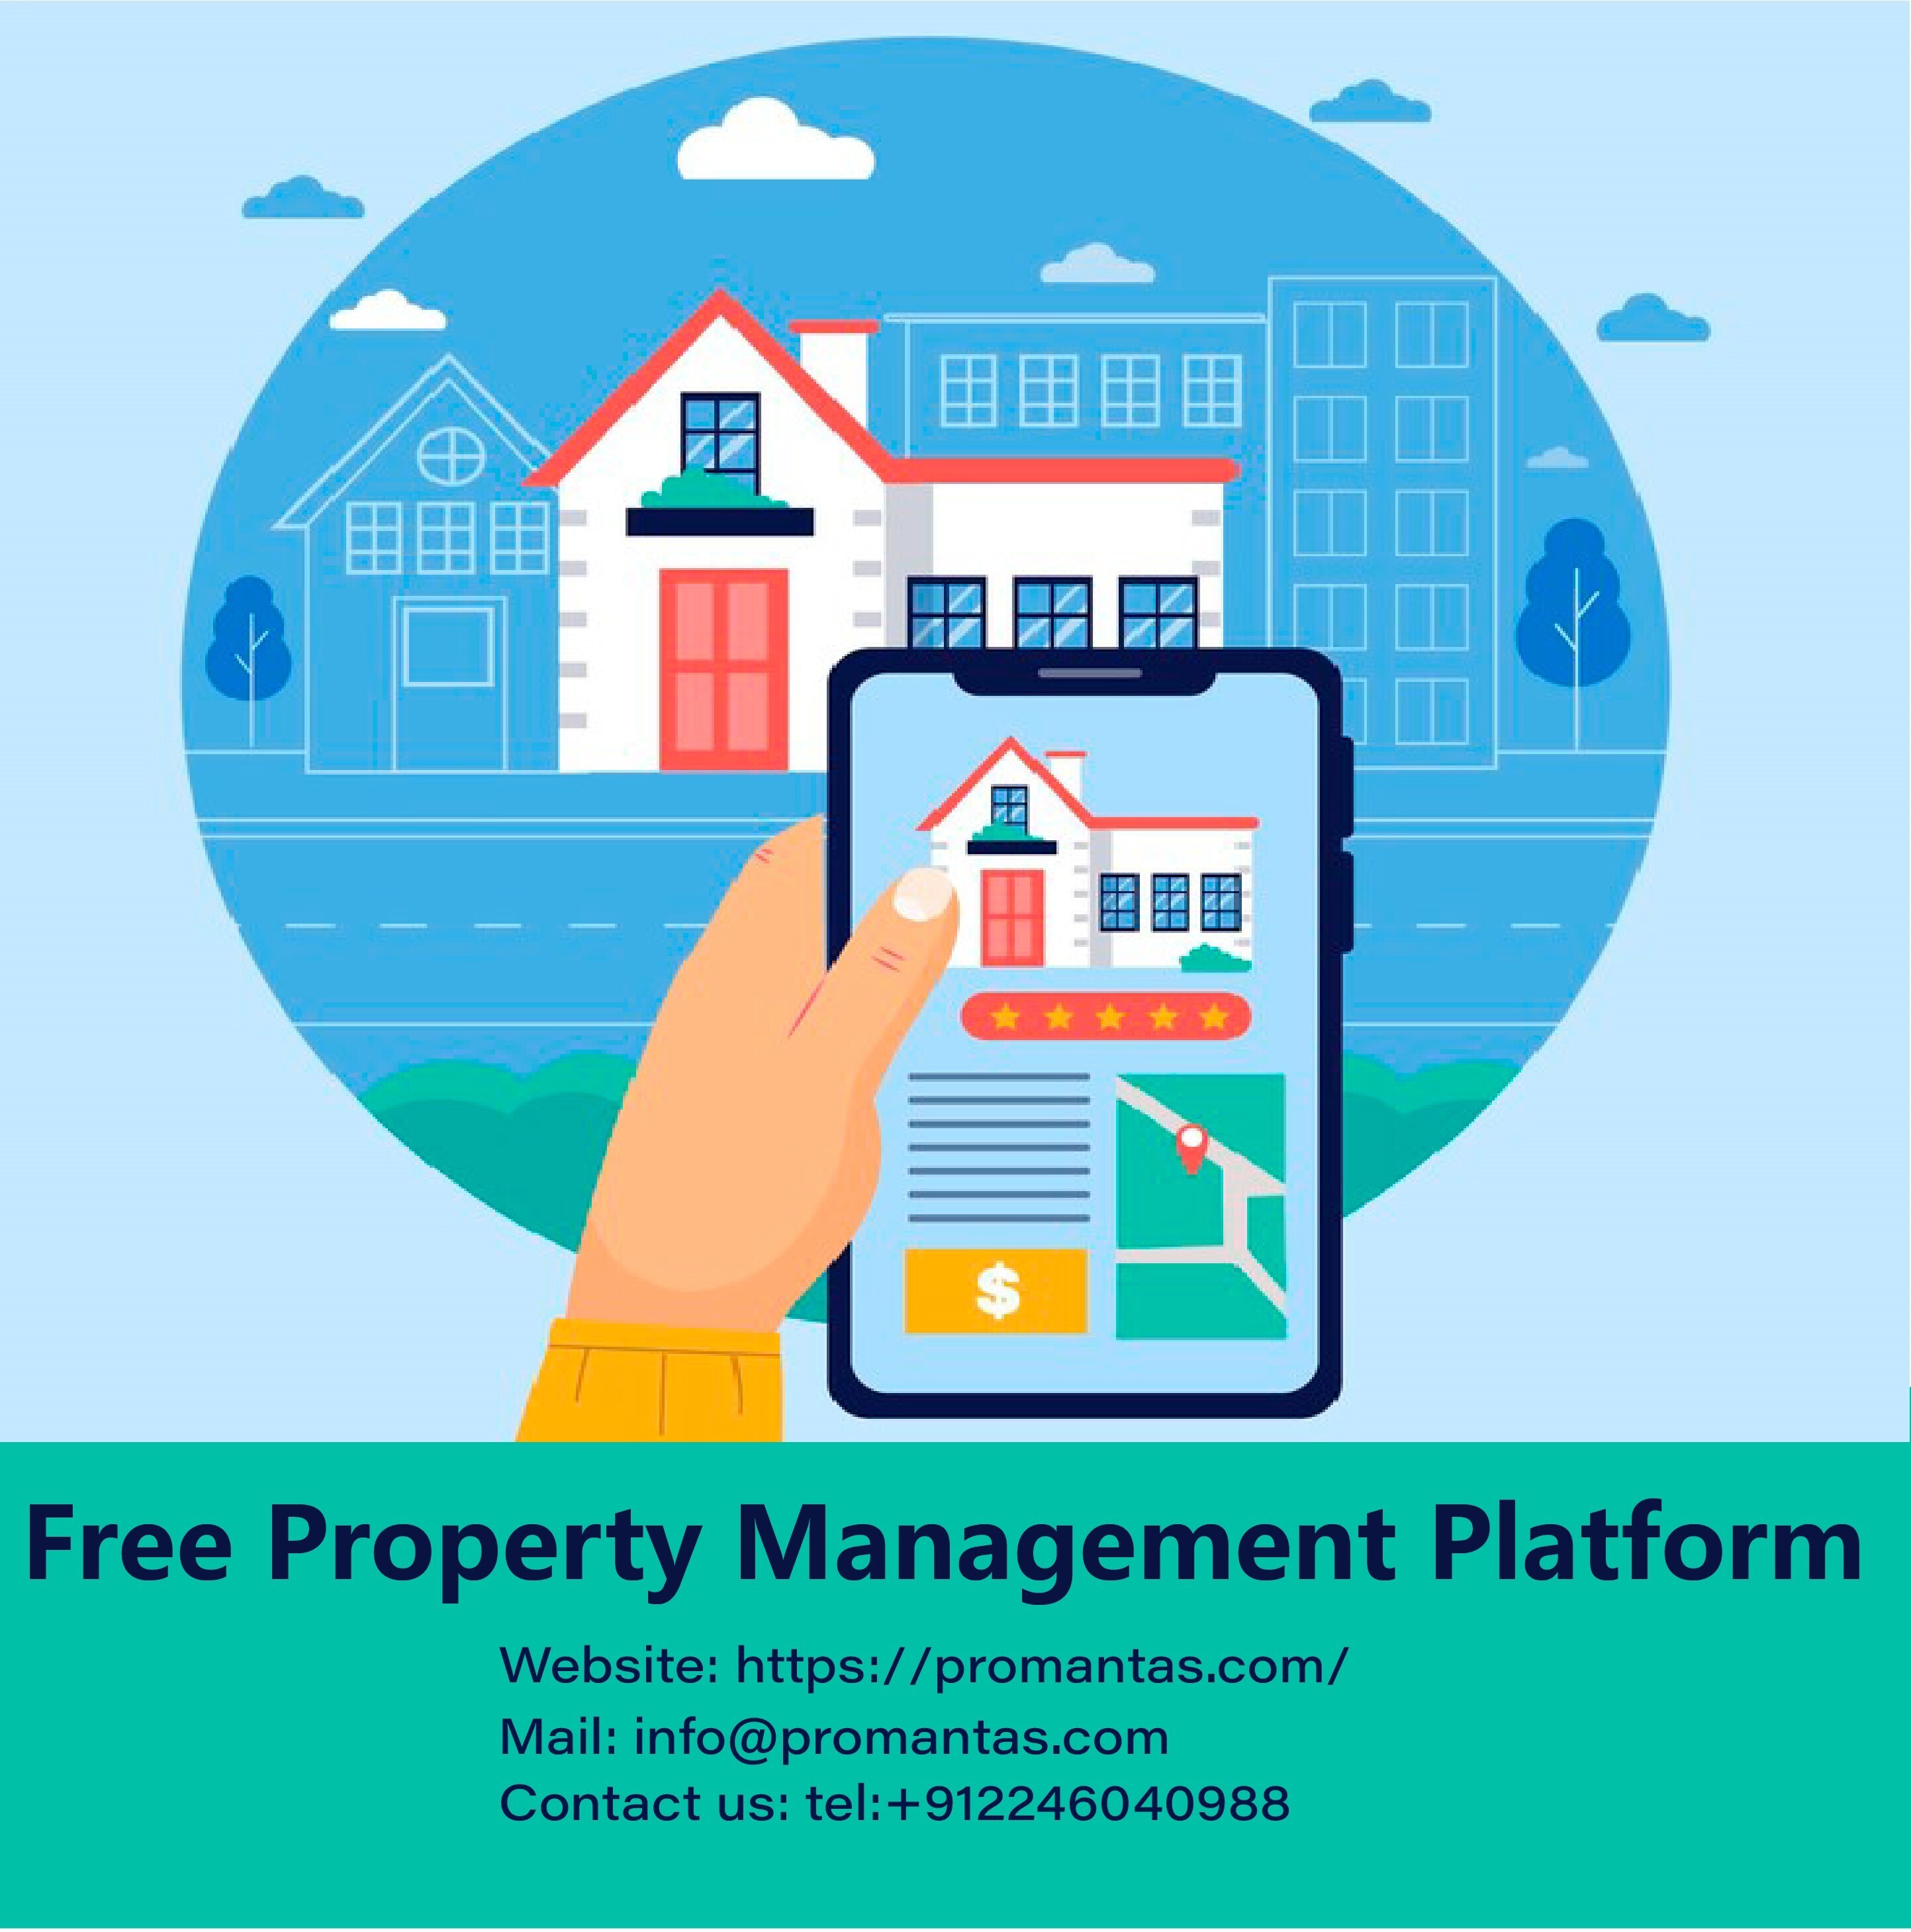  Streamline Property Management with a Free, User-Friendly Platform